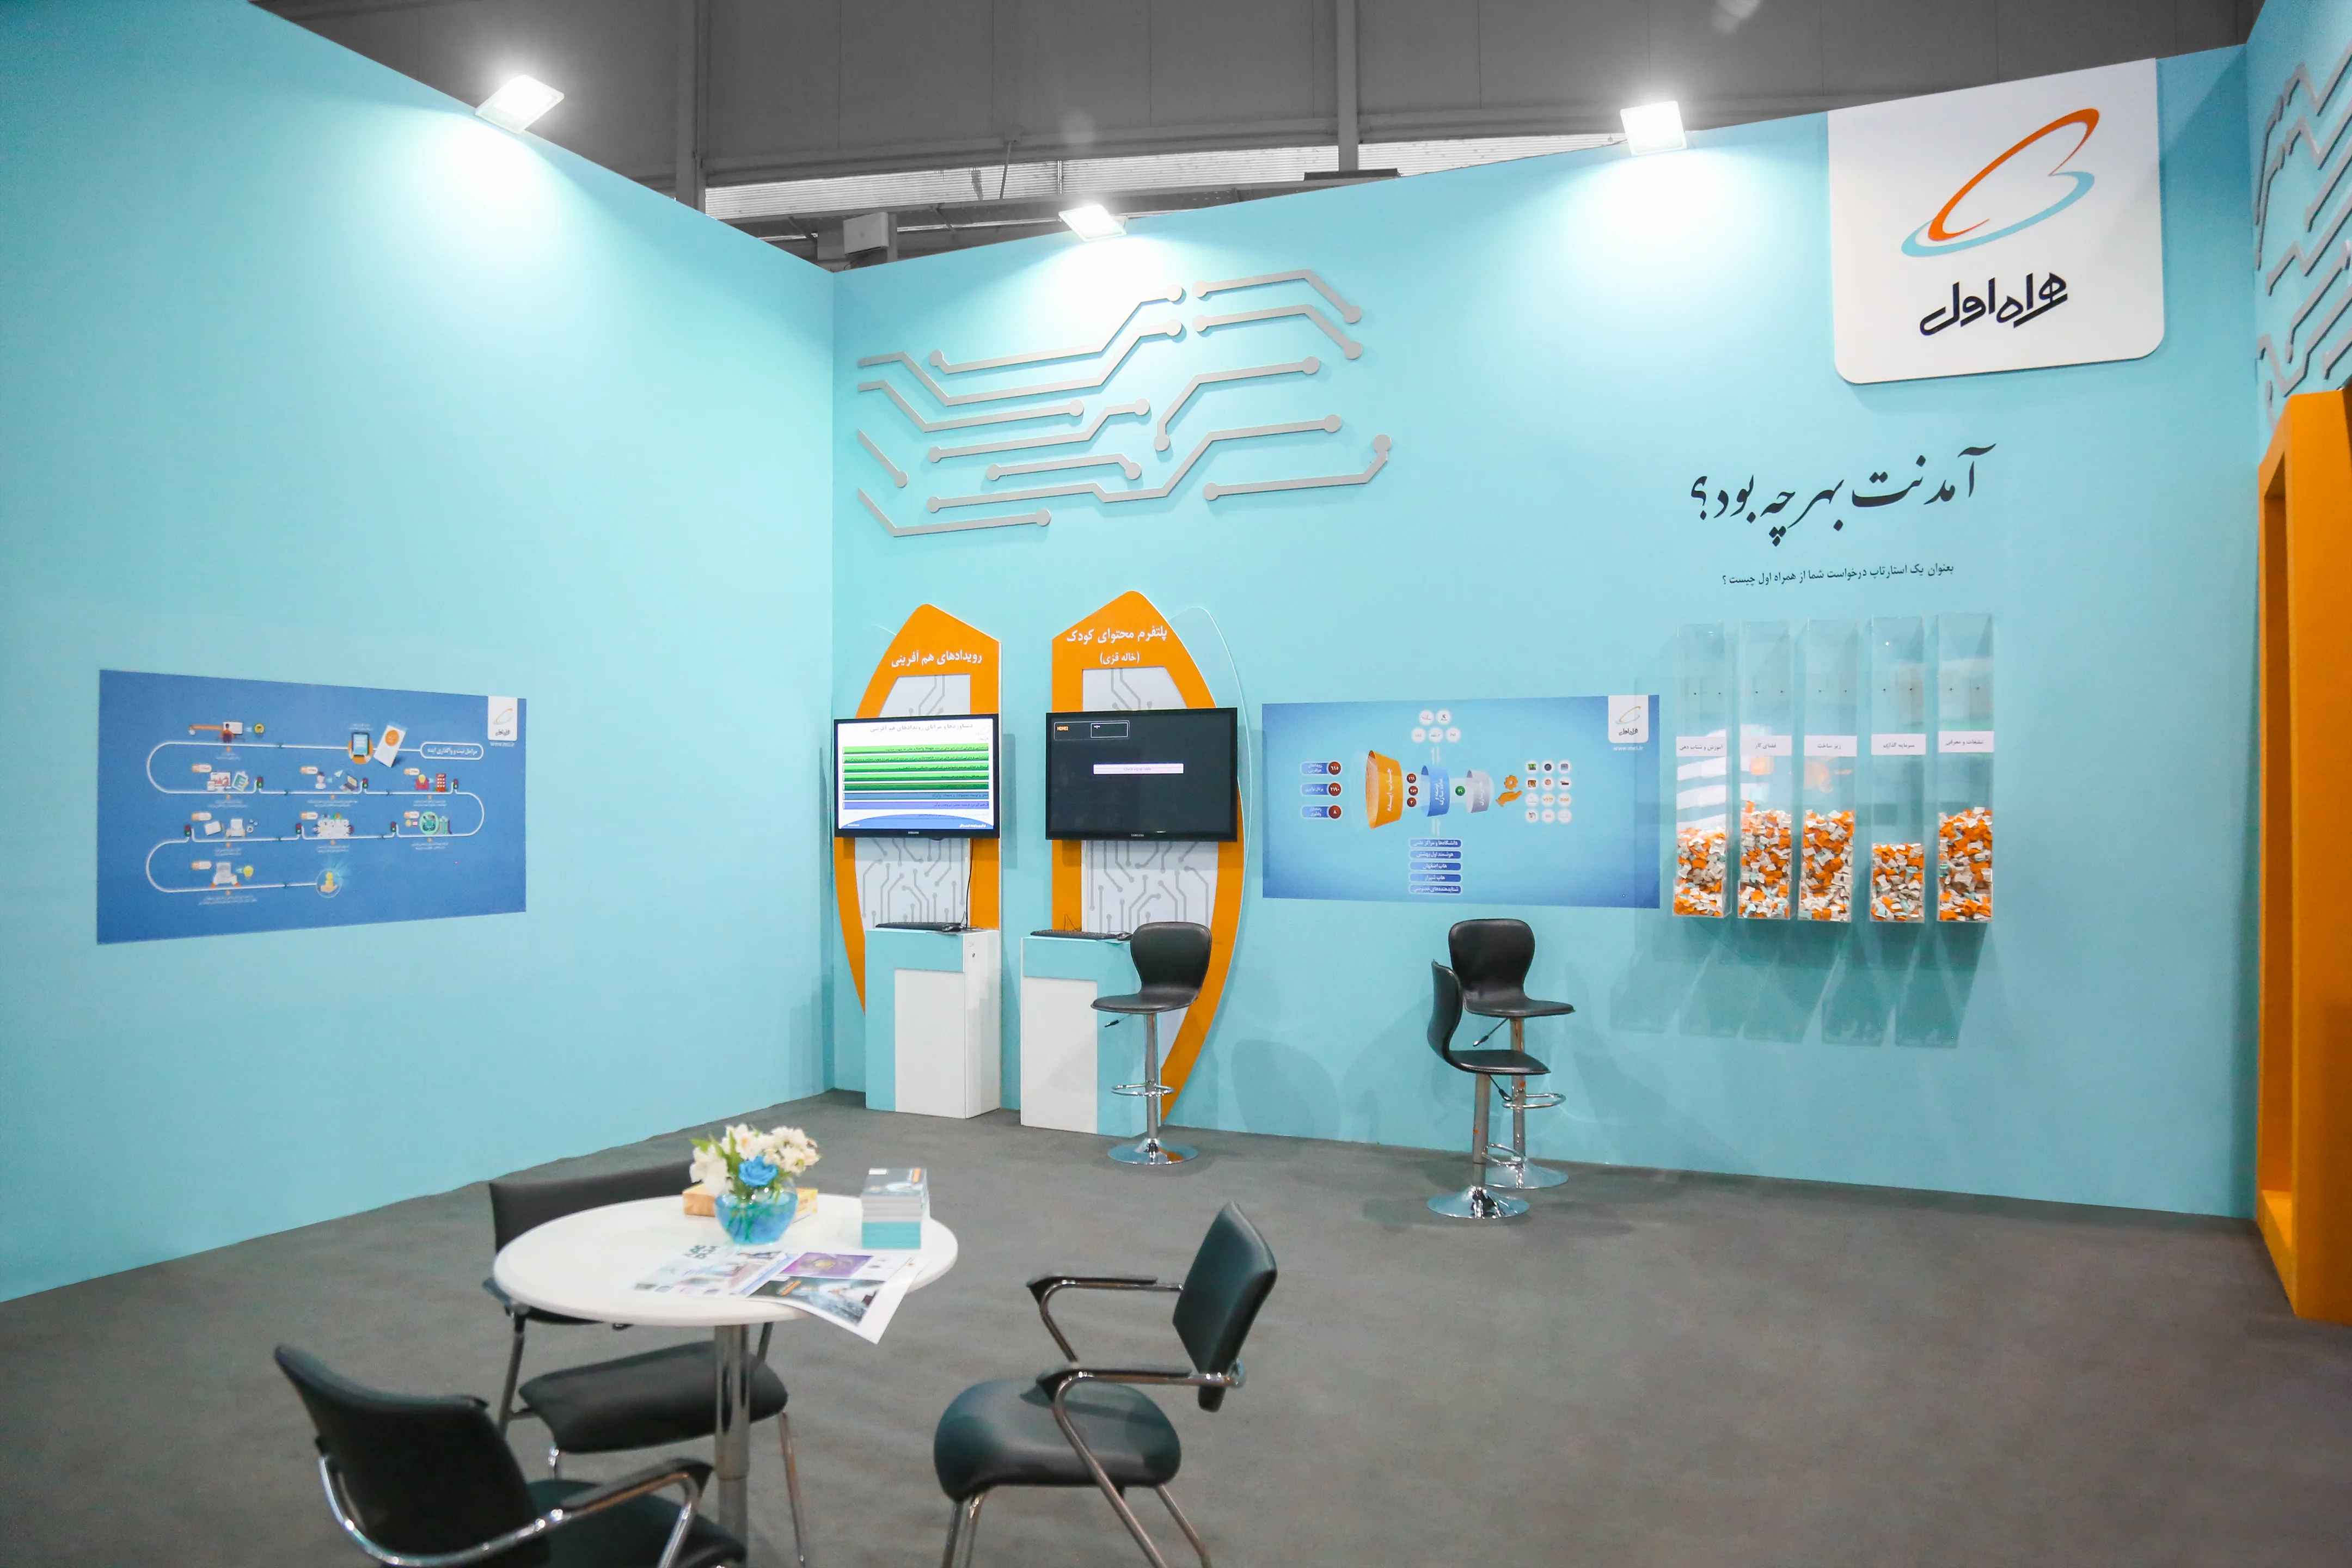   hamrah06 hamrah05 طراحی غرفه همراه اول نمایشگاه تلکام تهران 1397 